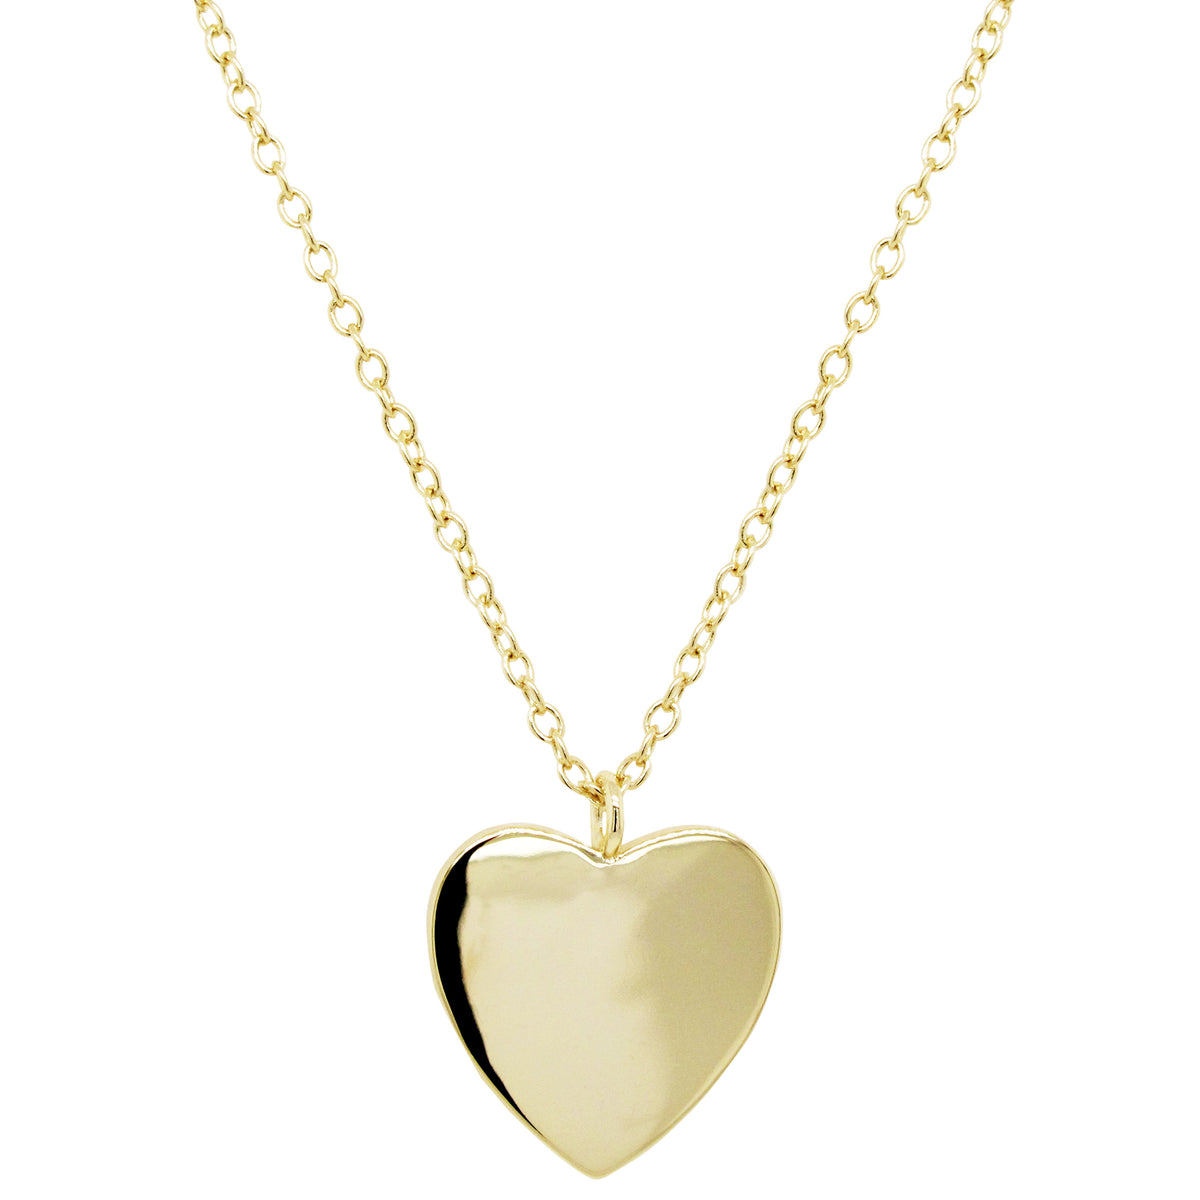 Gold plated shiny heart pendant